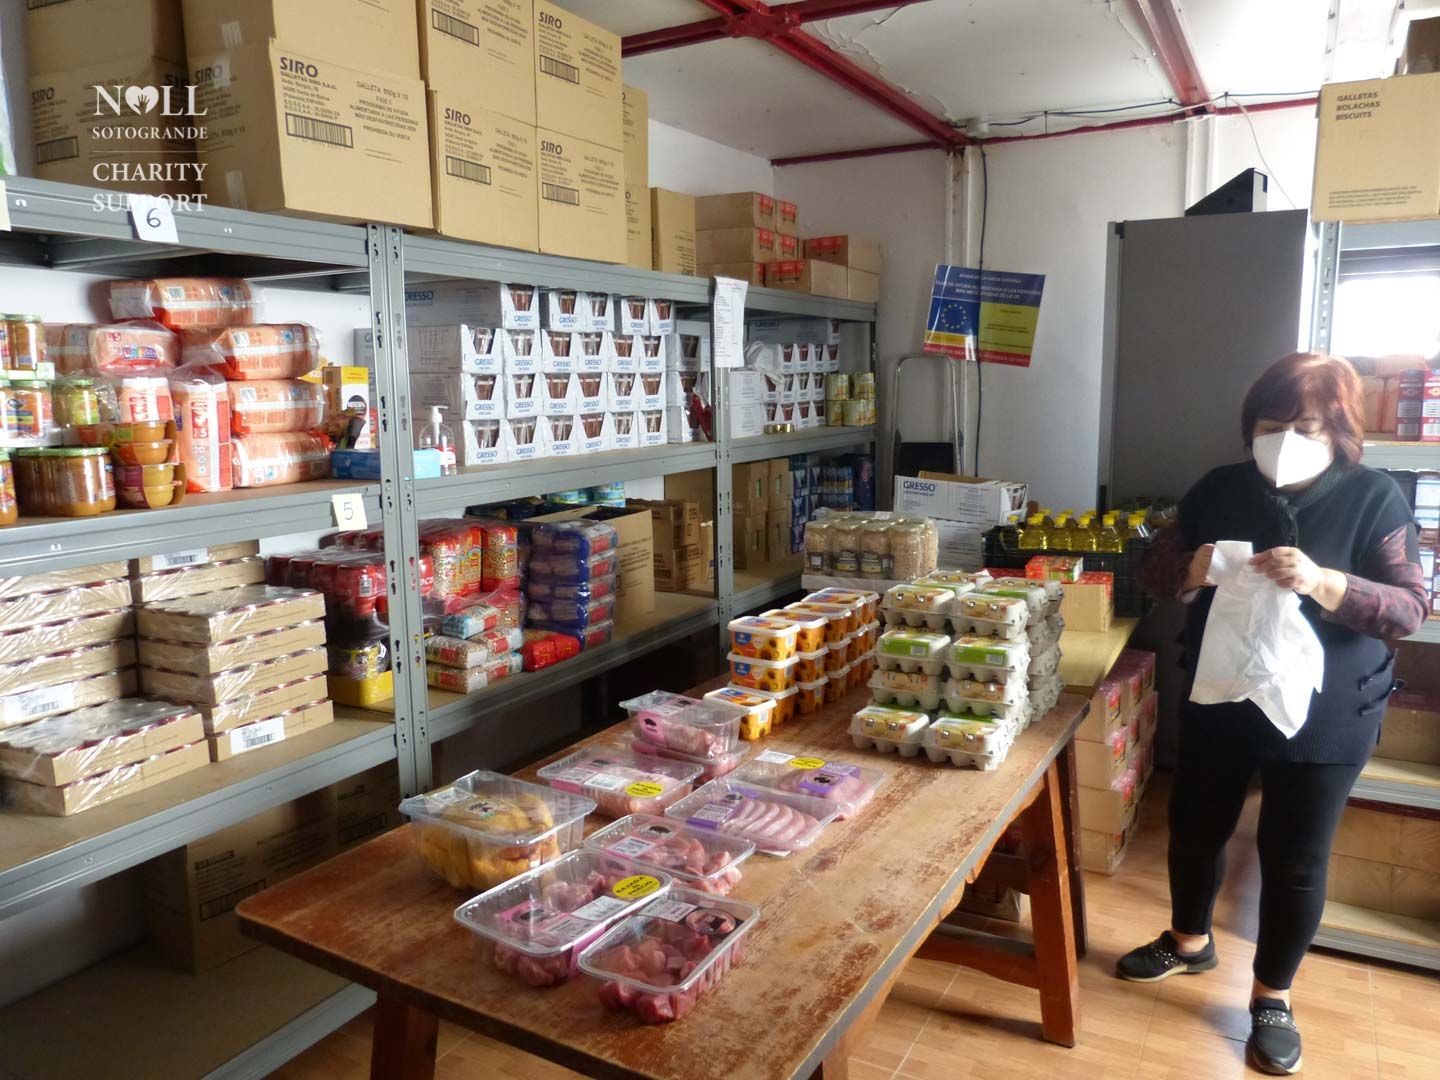 Stephanie Noll visits BACG Distribution Point in La Línea Kiosk. NOLL SOTOGRANDE CHARITY SUPPORT 2021